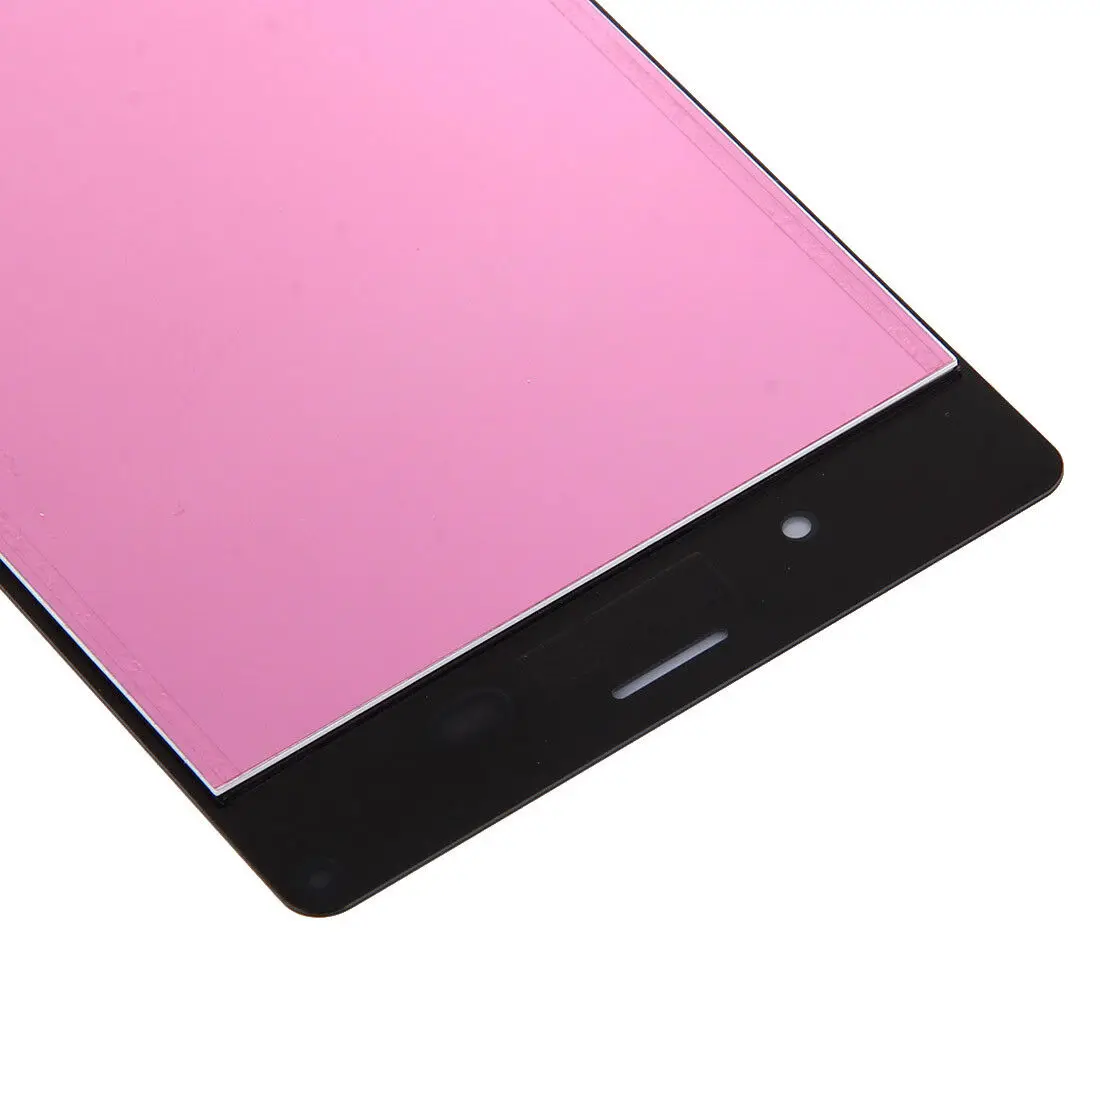 Дисплей для sony Xperia Z3 дисплей сенсорный экран с рамкой дигитайзер для sony Z3 ЖК-дисплей Замена E6553 D6603